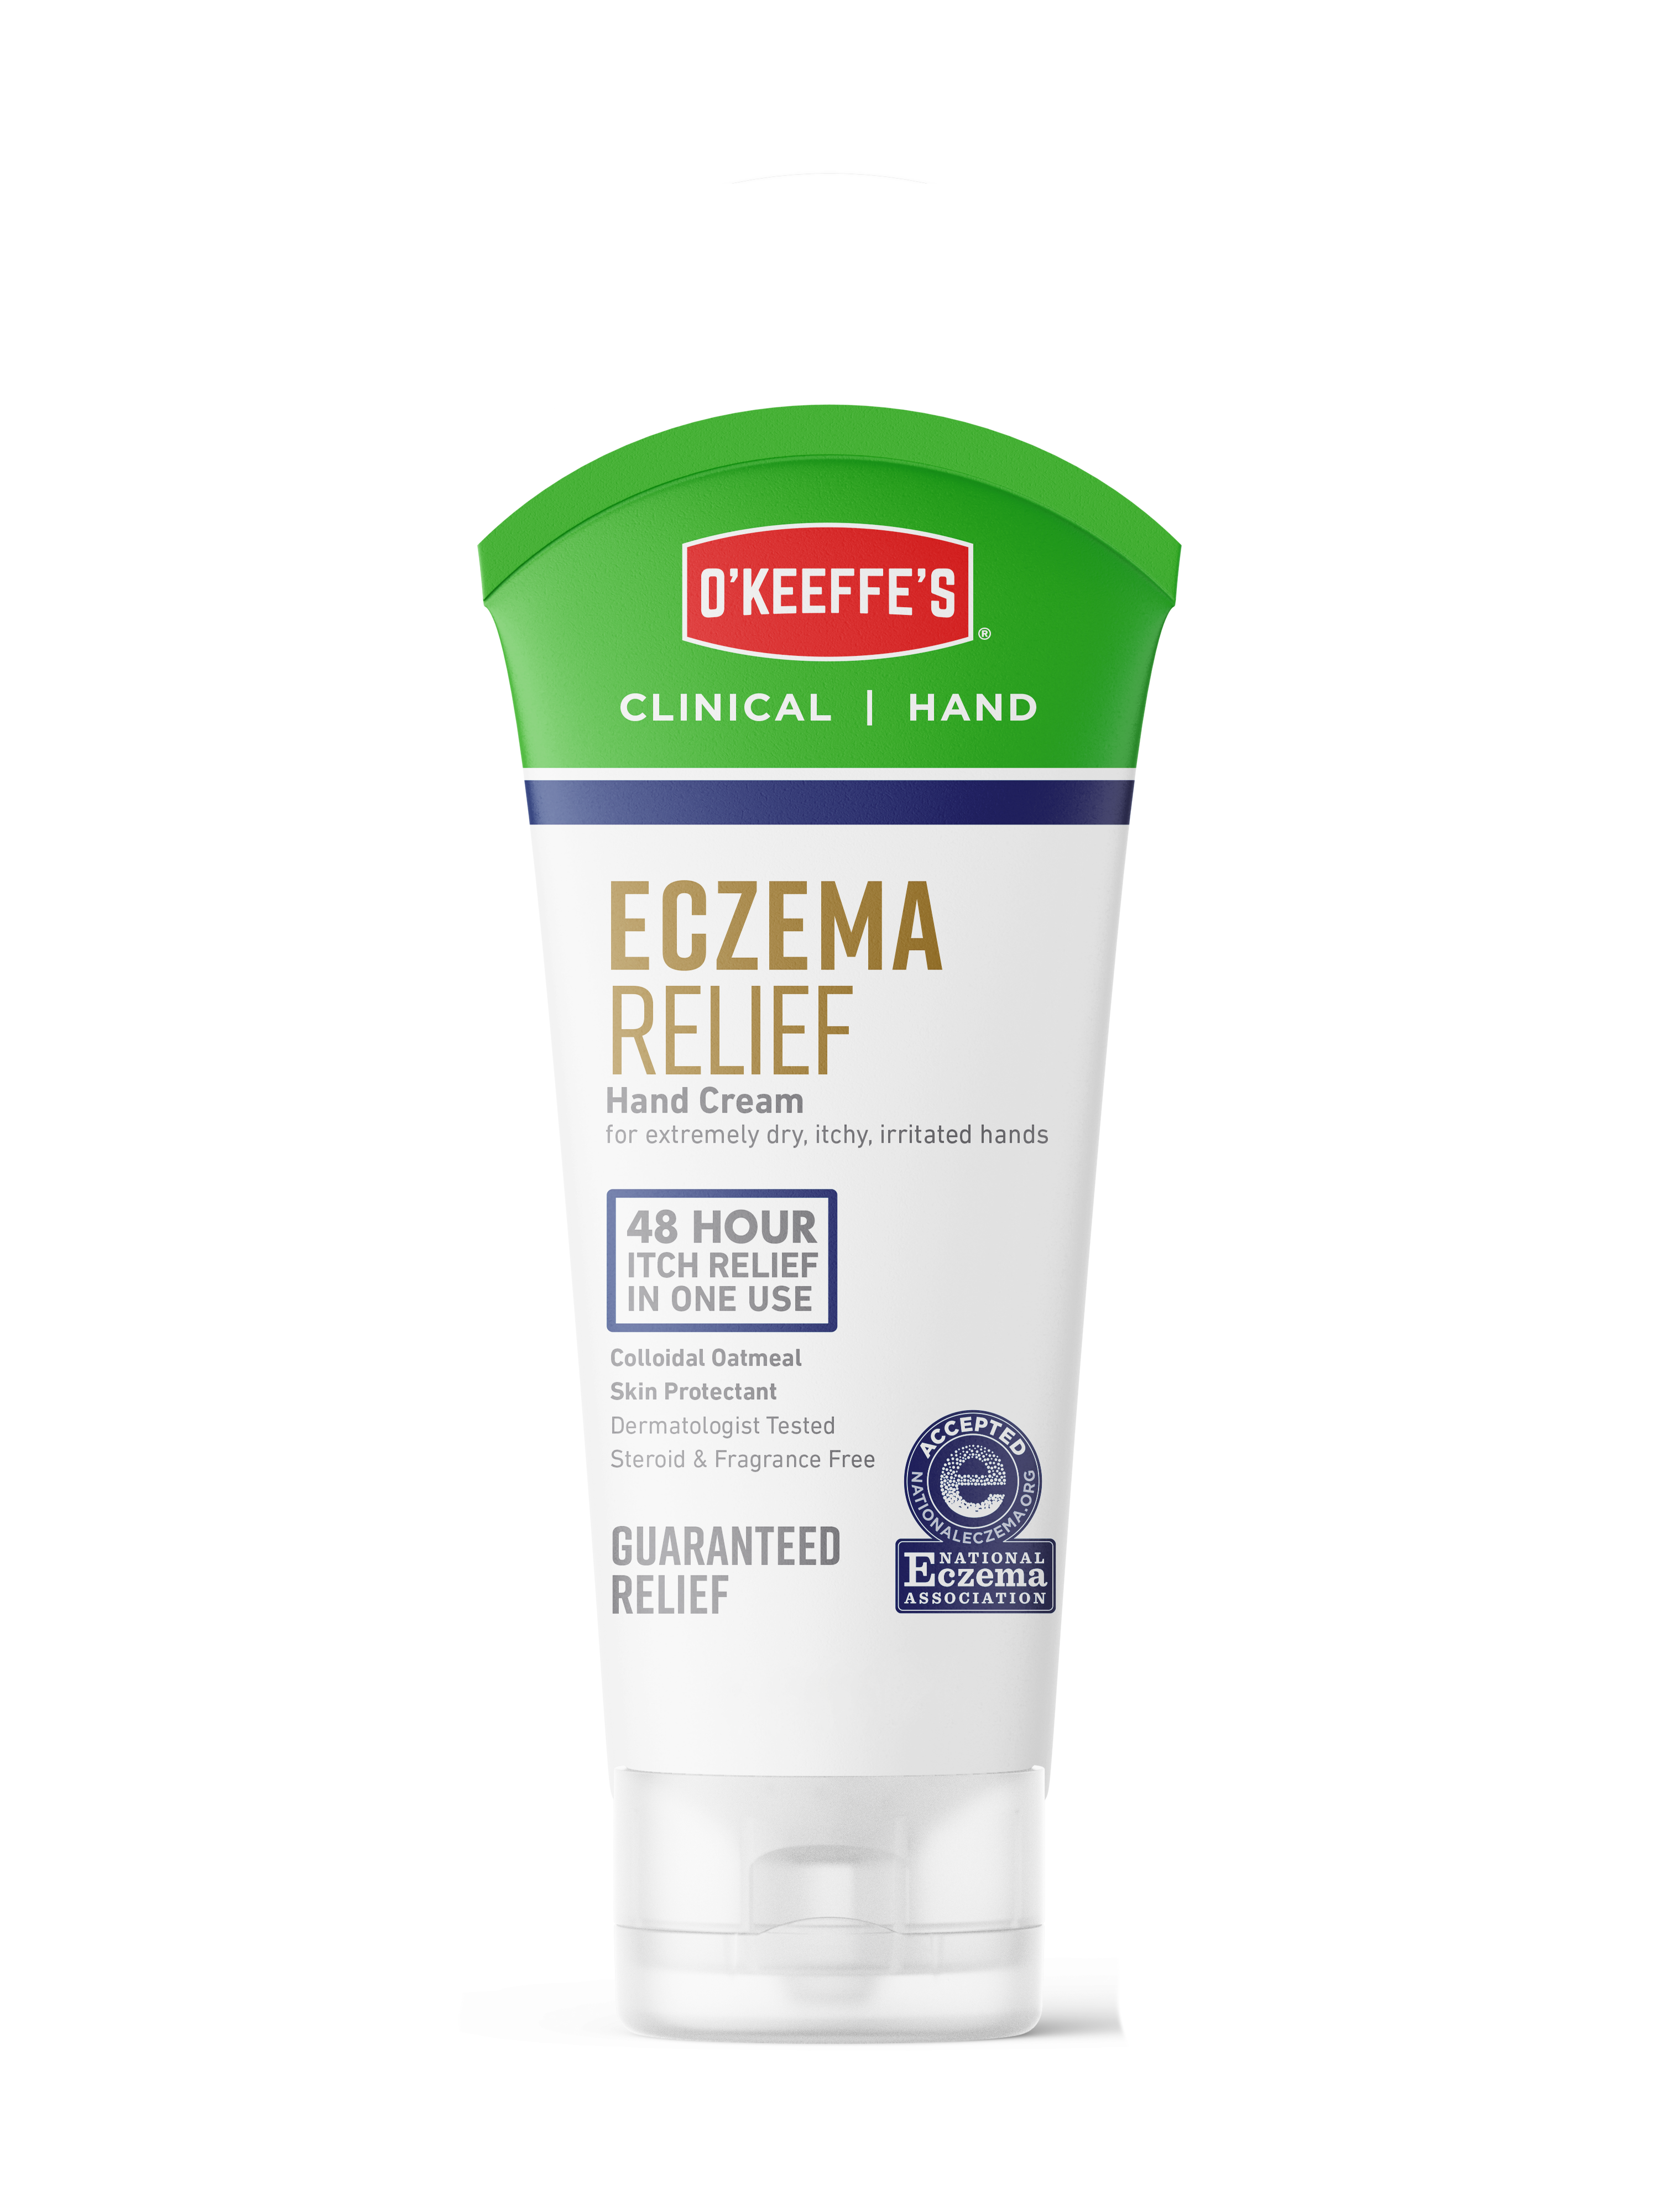 OâKeeffesâs Eczema Relief Hand Cream